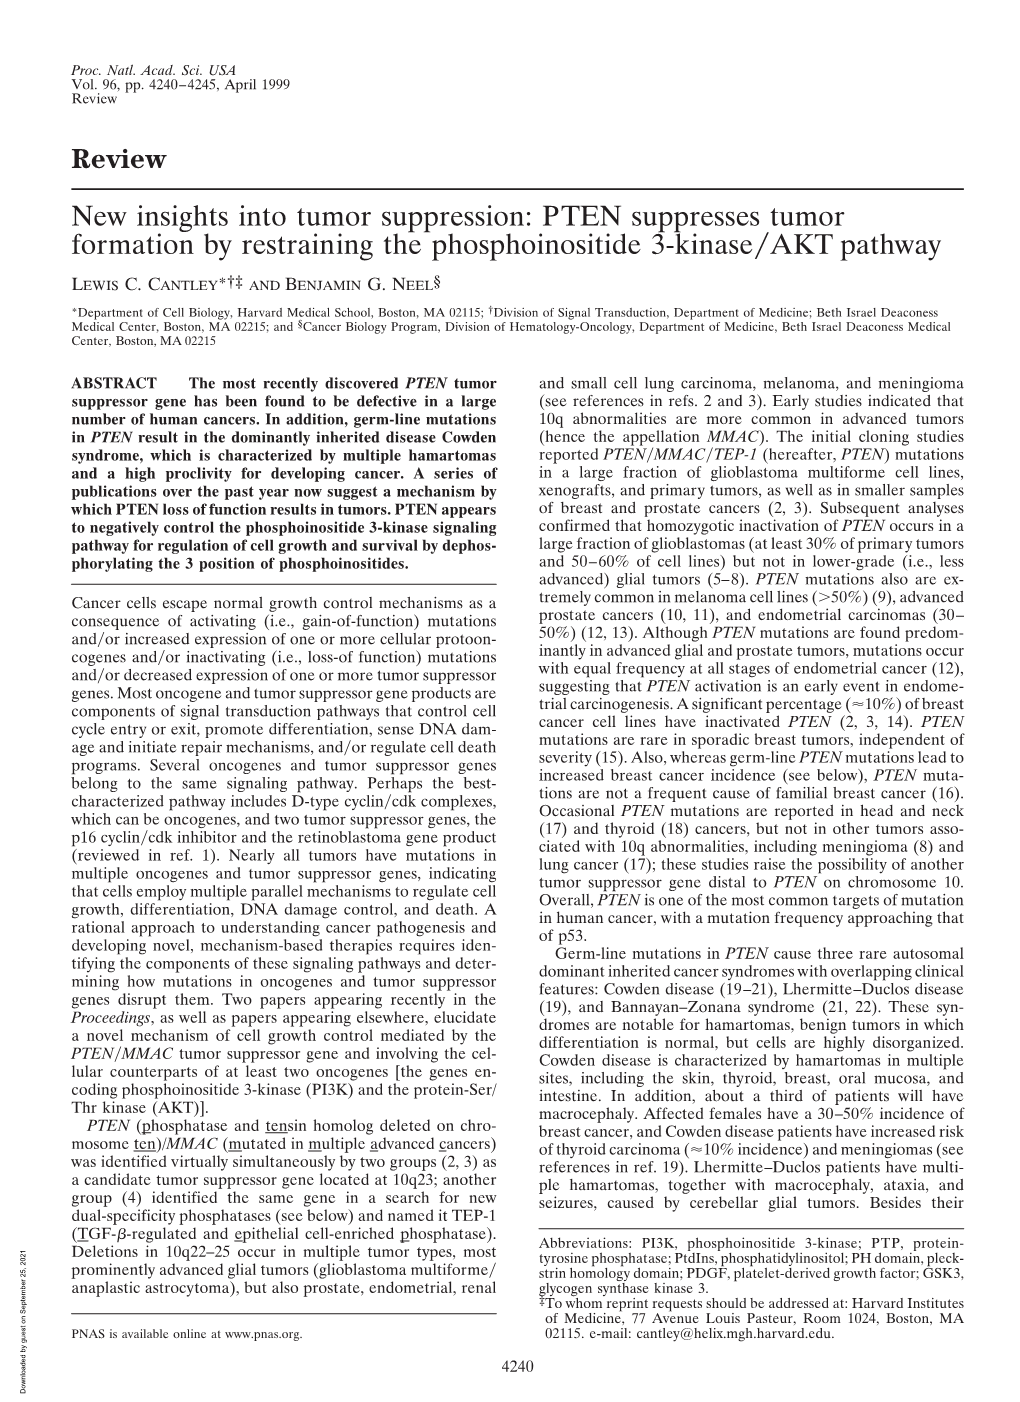 PTEN Suppresses Tumor Formation by Restraining the Phosphoinositide 3-Kinase͞akt Pathway